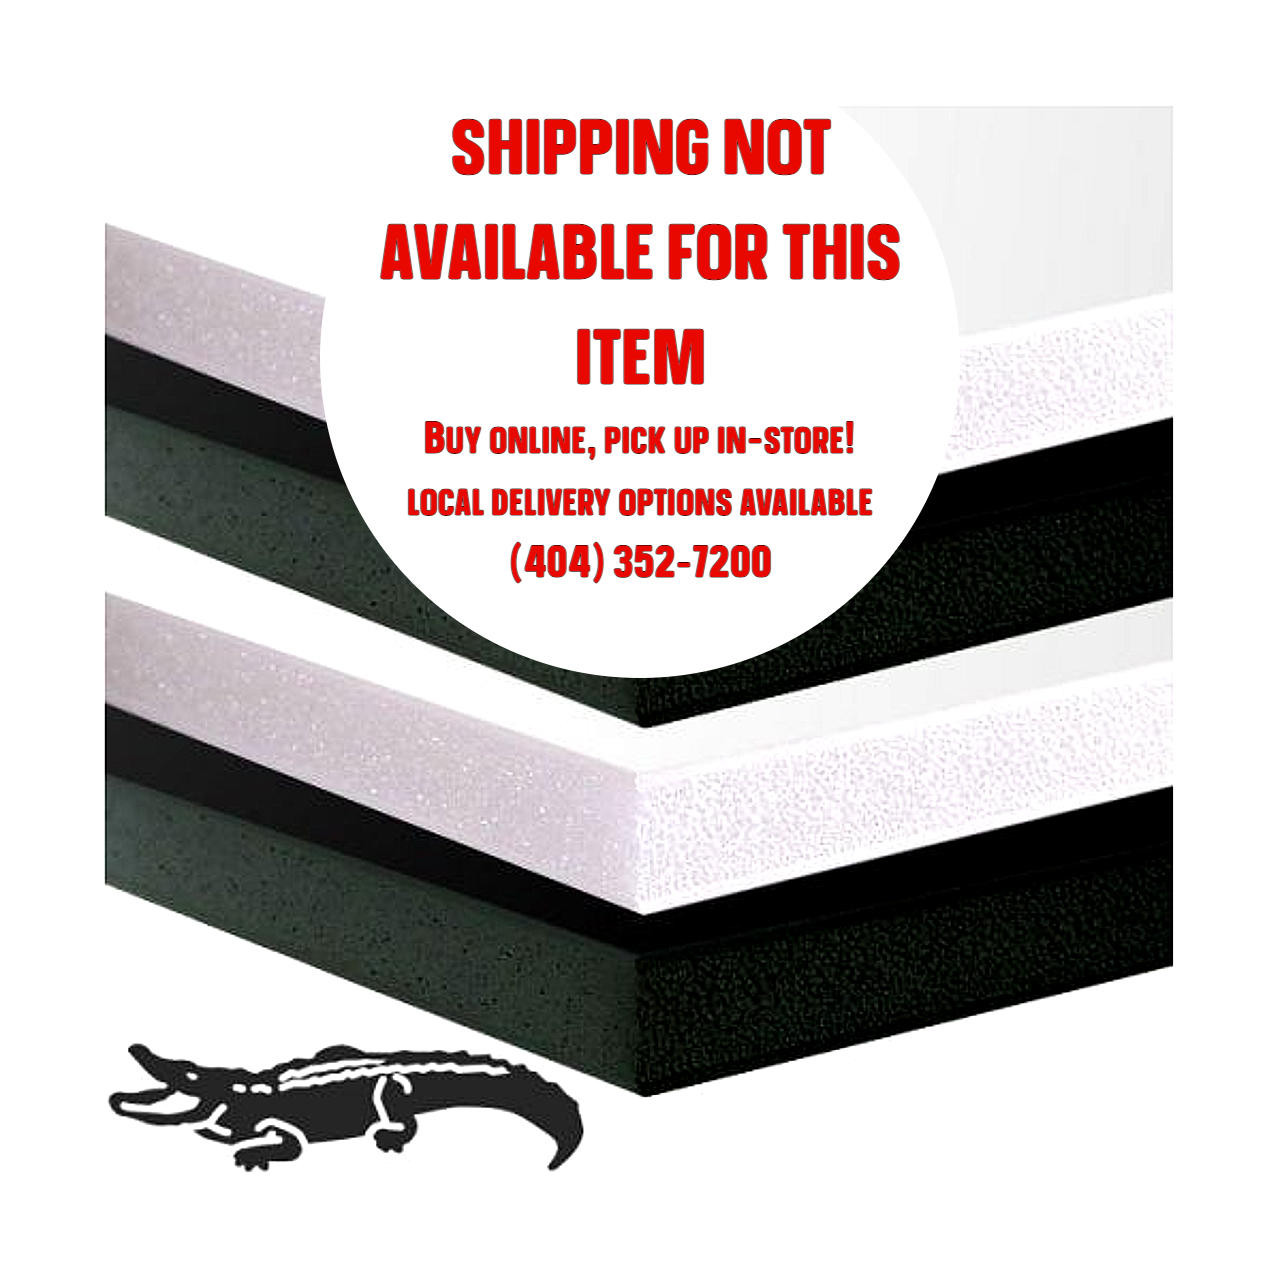 24 x 36 X 3/16th Black Self Adhesive Gator Board 15 pack